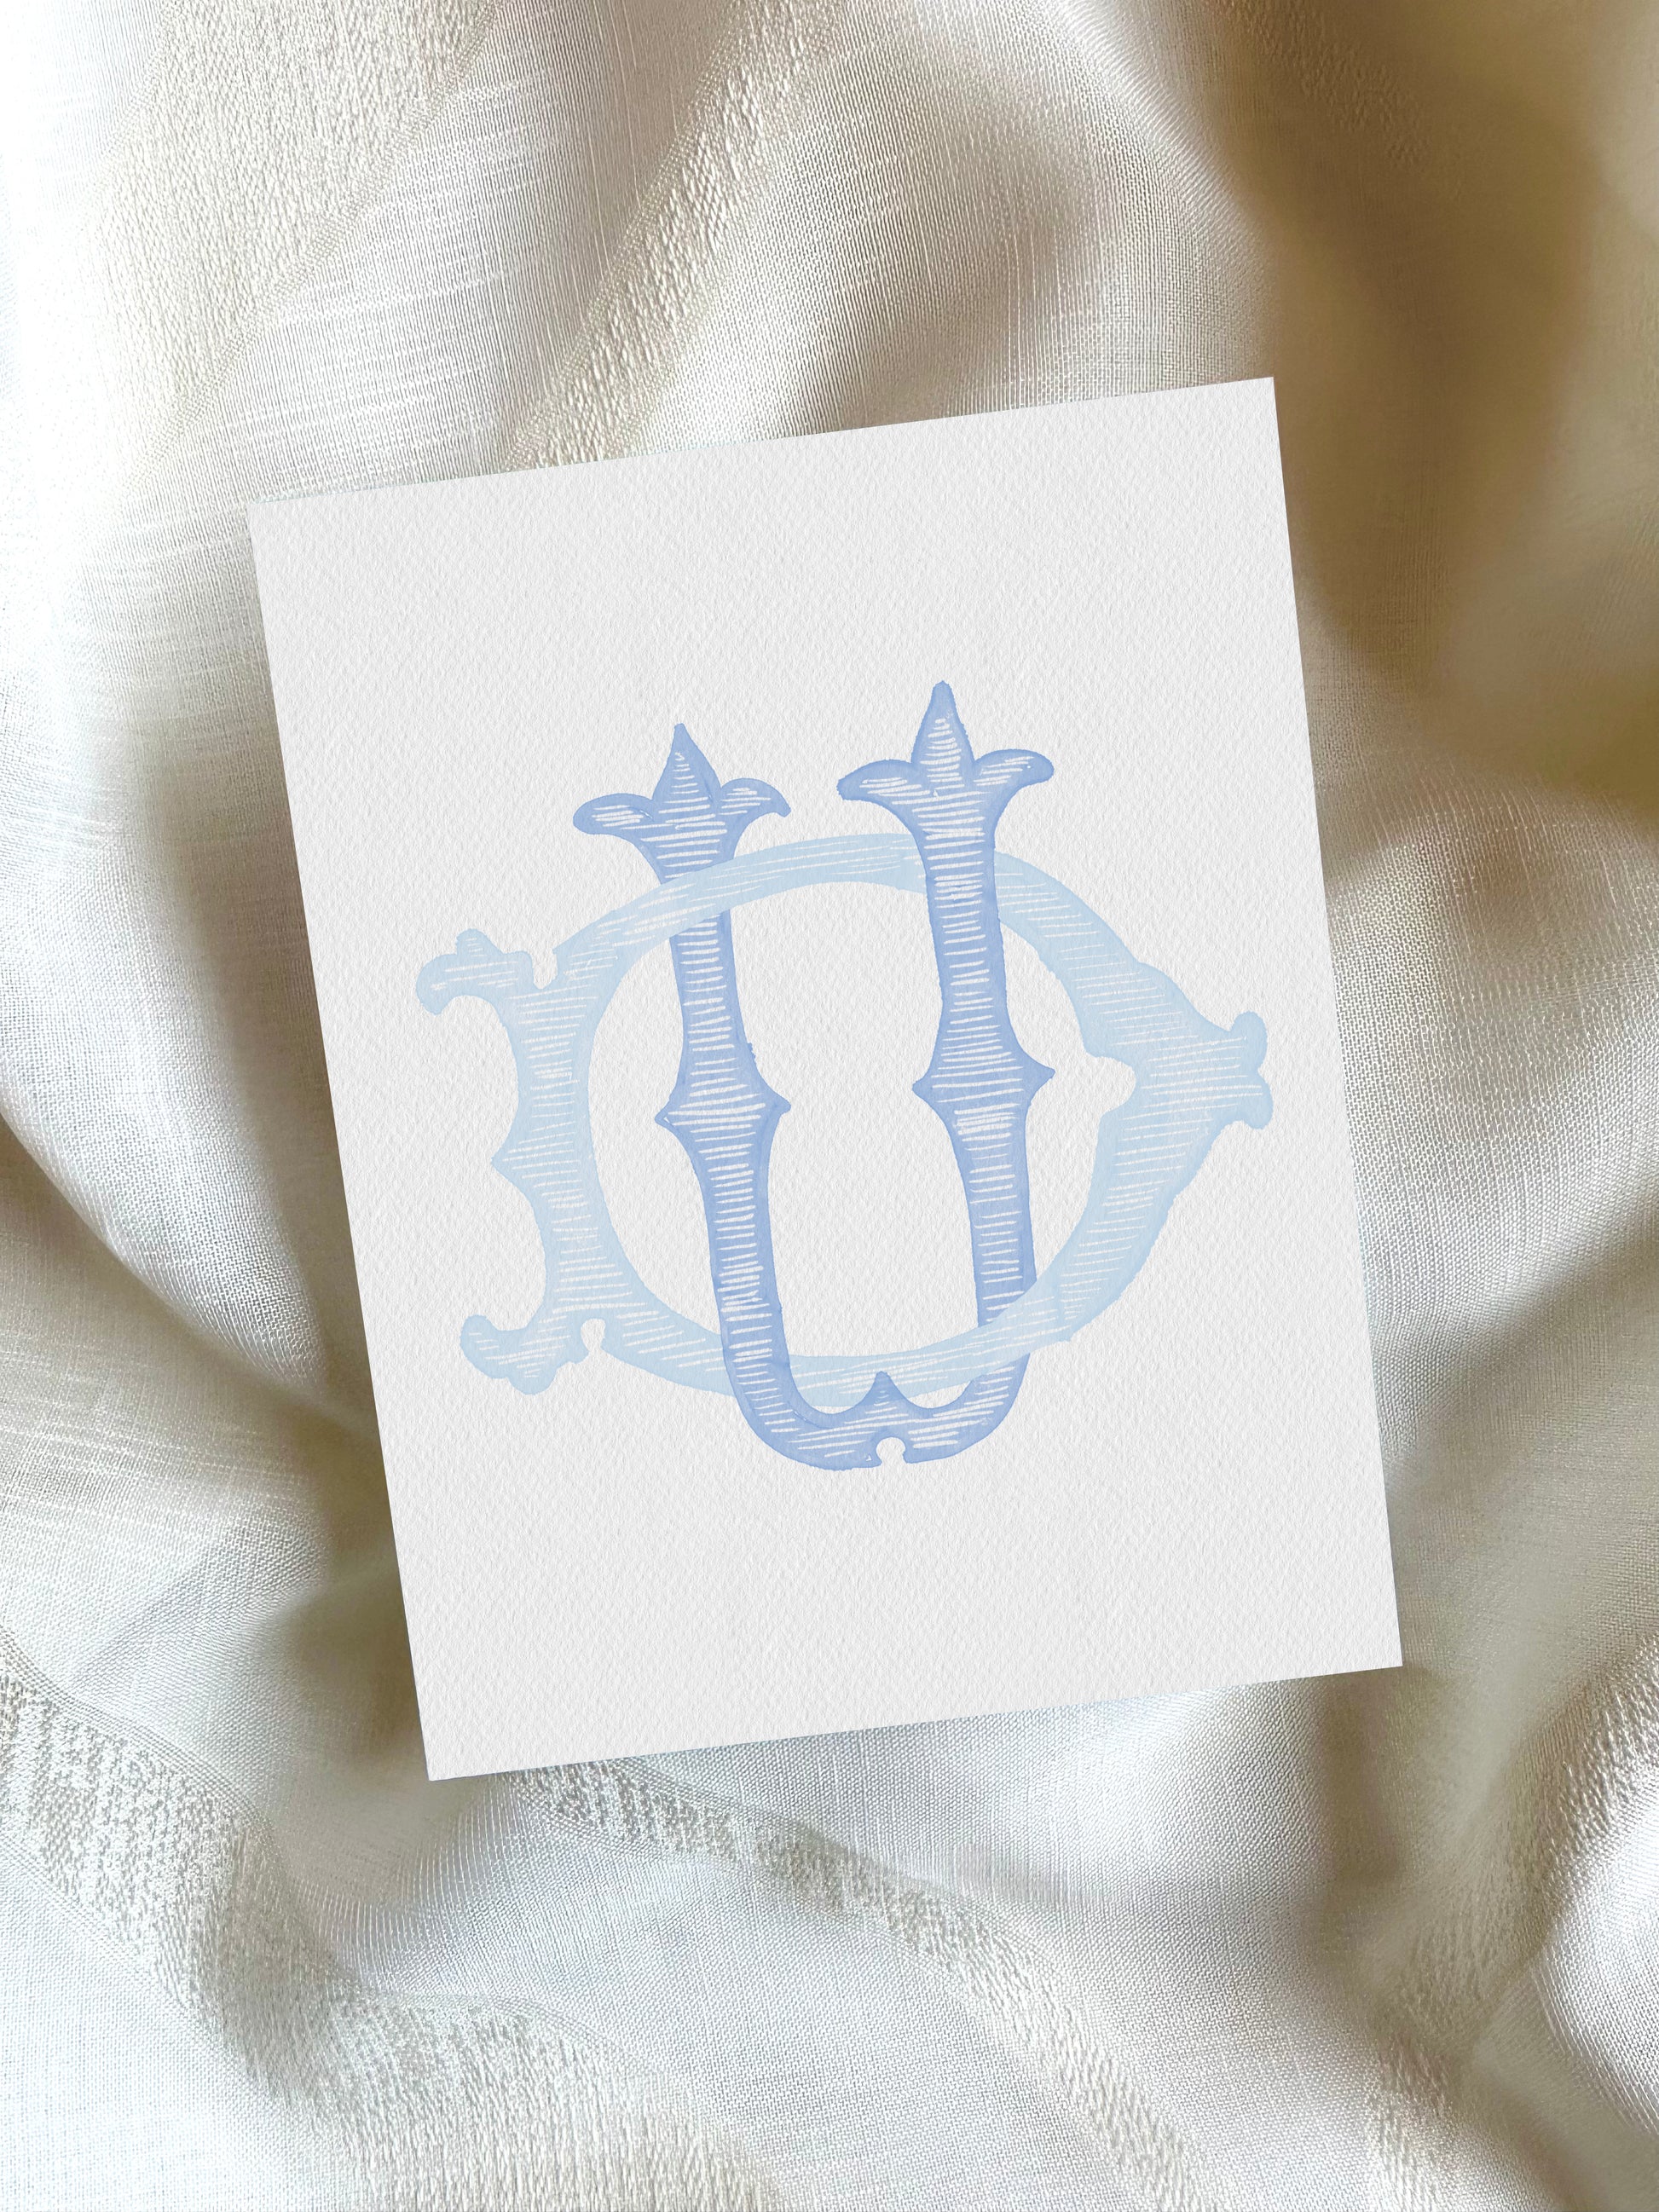 2 Letter Monogram with Letters DU UD | Digital Download - Wedding Monogram SVG, Personal Logo, Wedding Logo for Wedding Invitations The Wedding Crest Lab